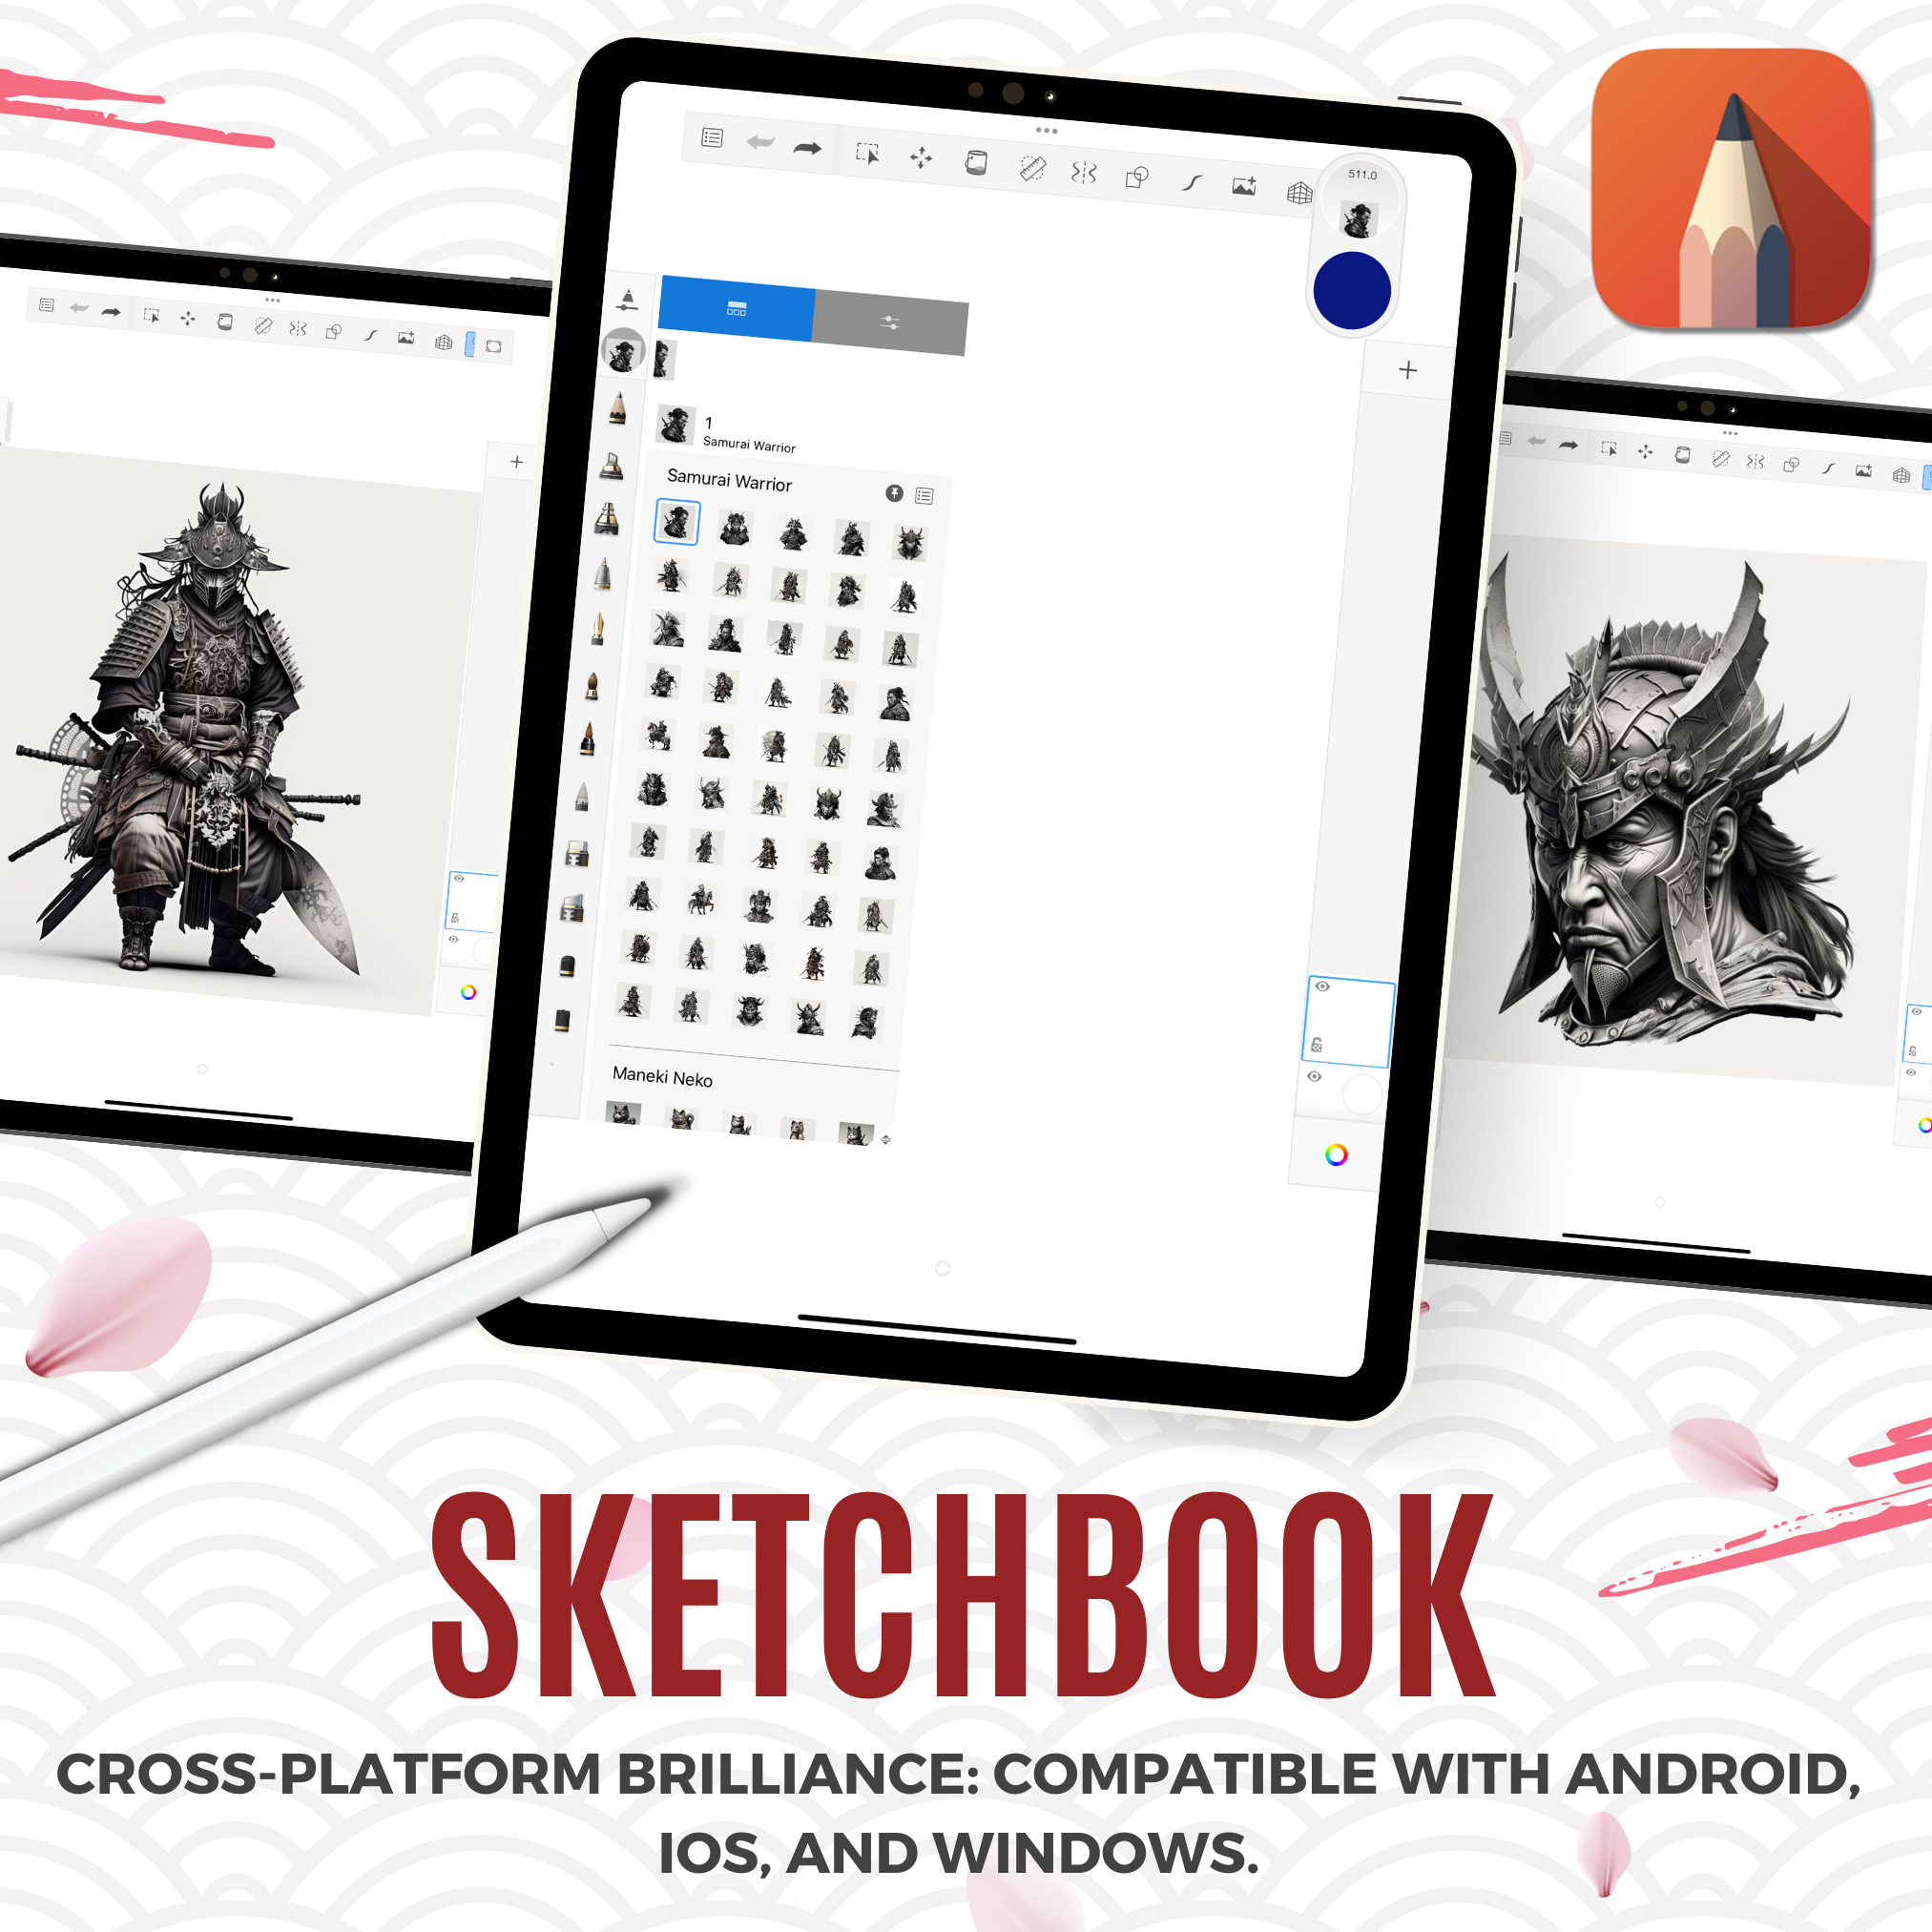 Samurai Warriors Digital Reference Design Collection: 50 Procreate & Sketchbook Images